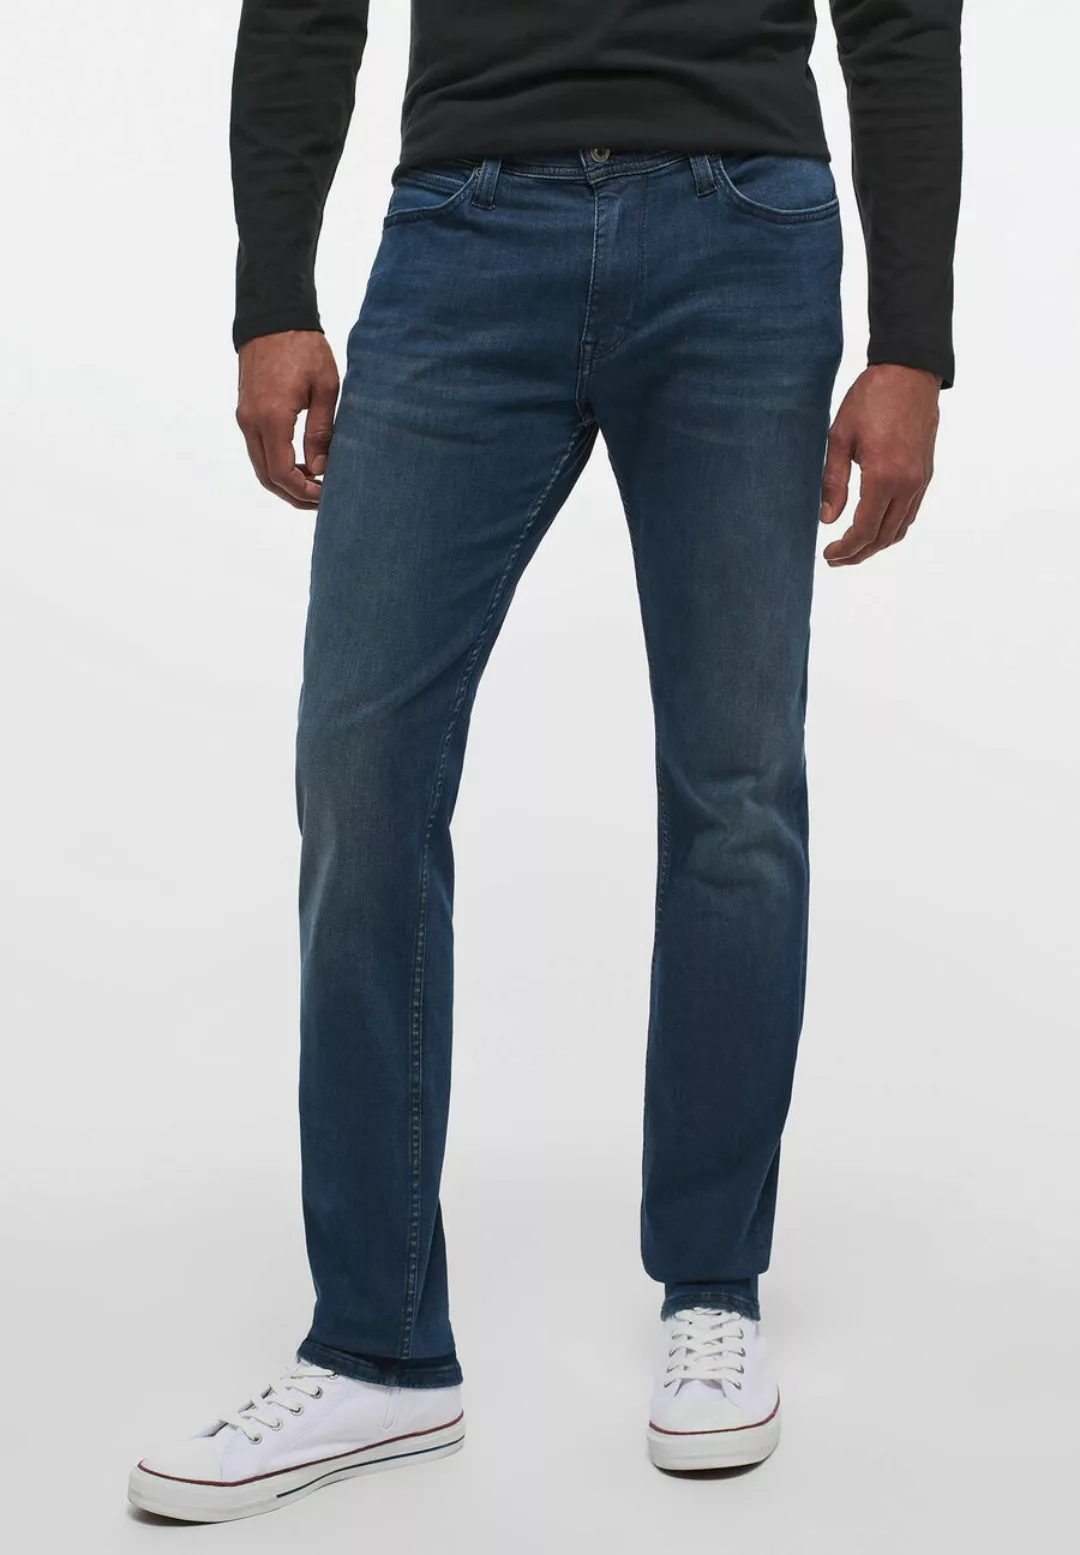 Mustang Vegas Jeans Slim Fit ink blue used extra lang günstig online kaufen